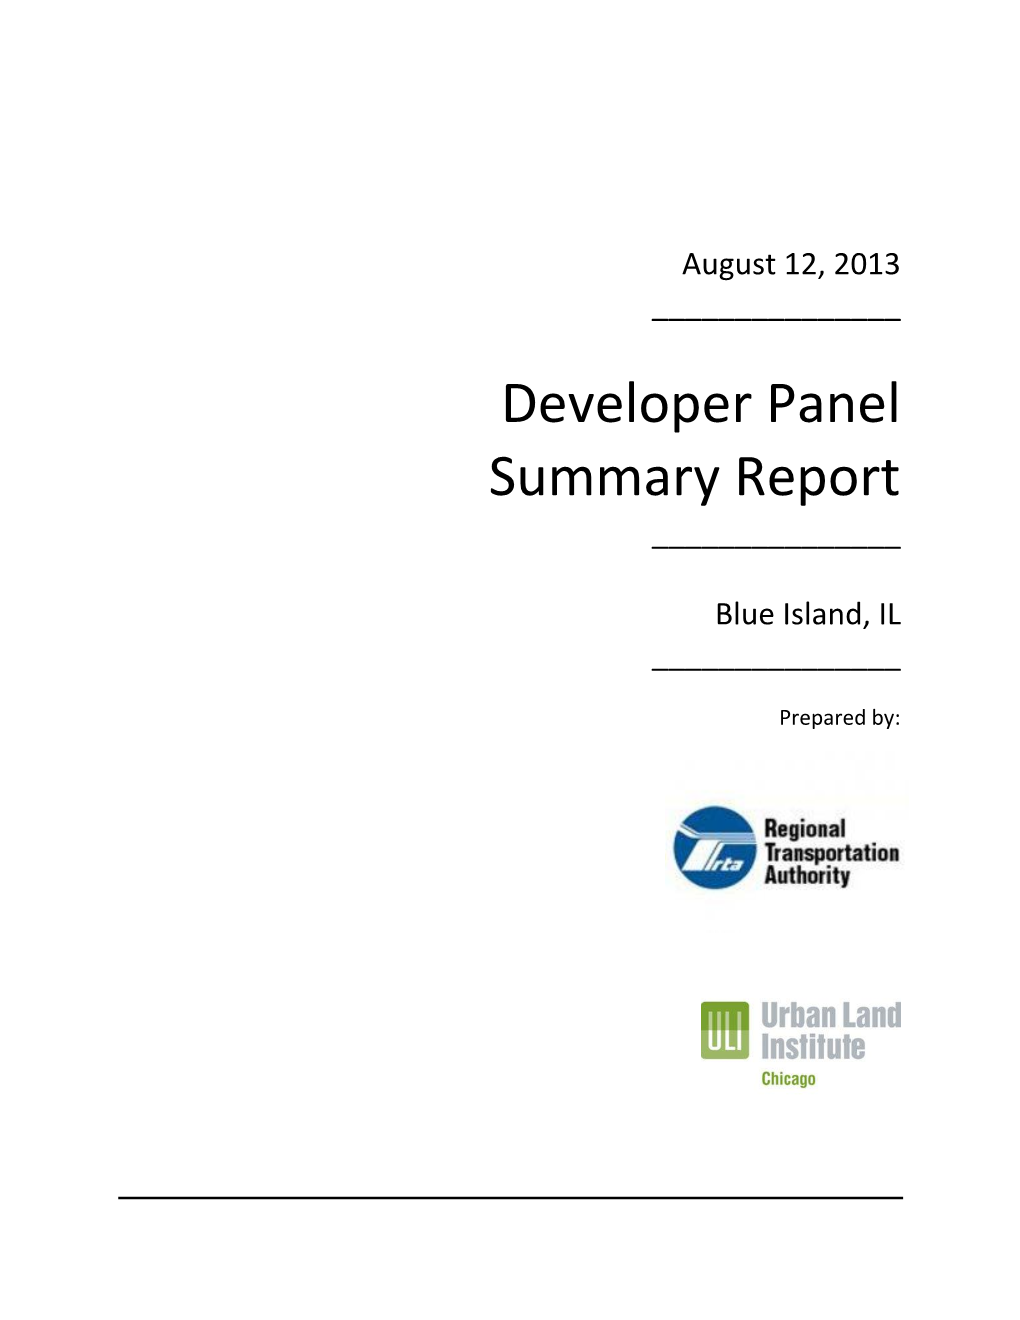 Blue Island Developer Discussion Panel (Summary Report)